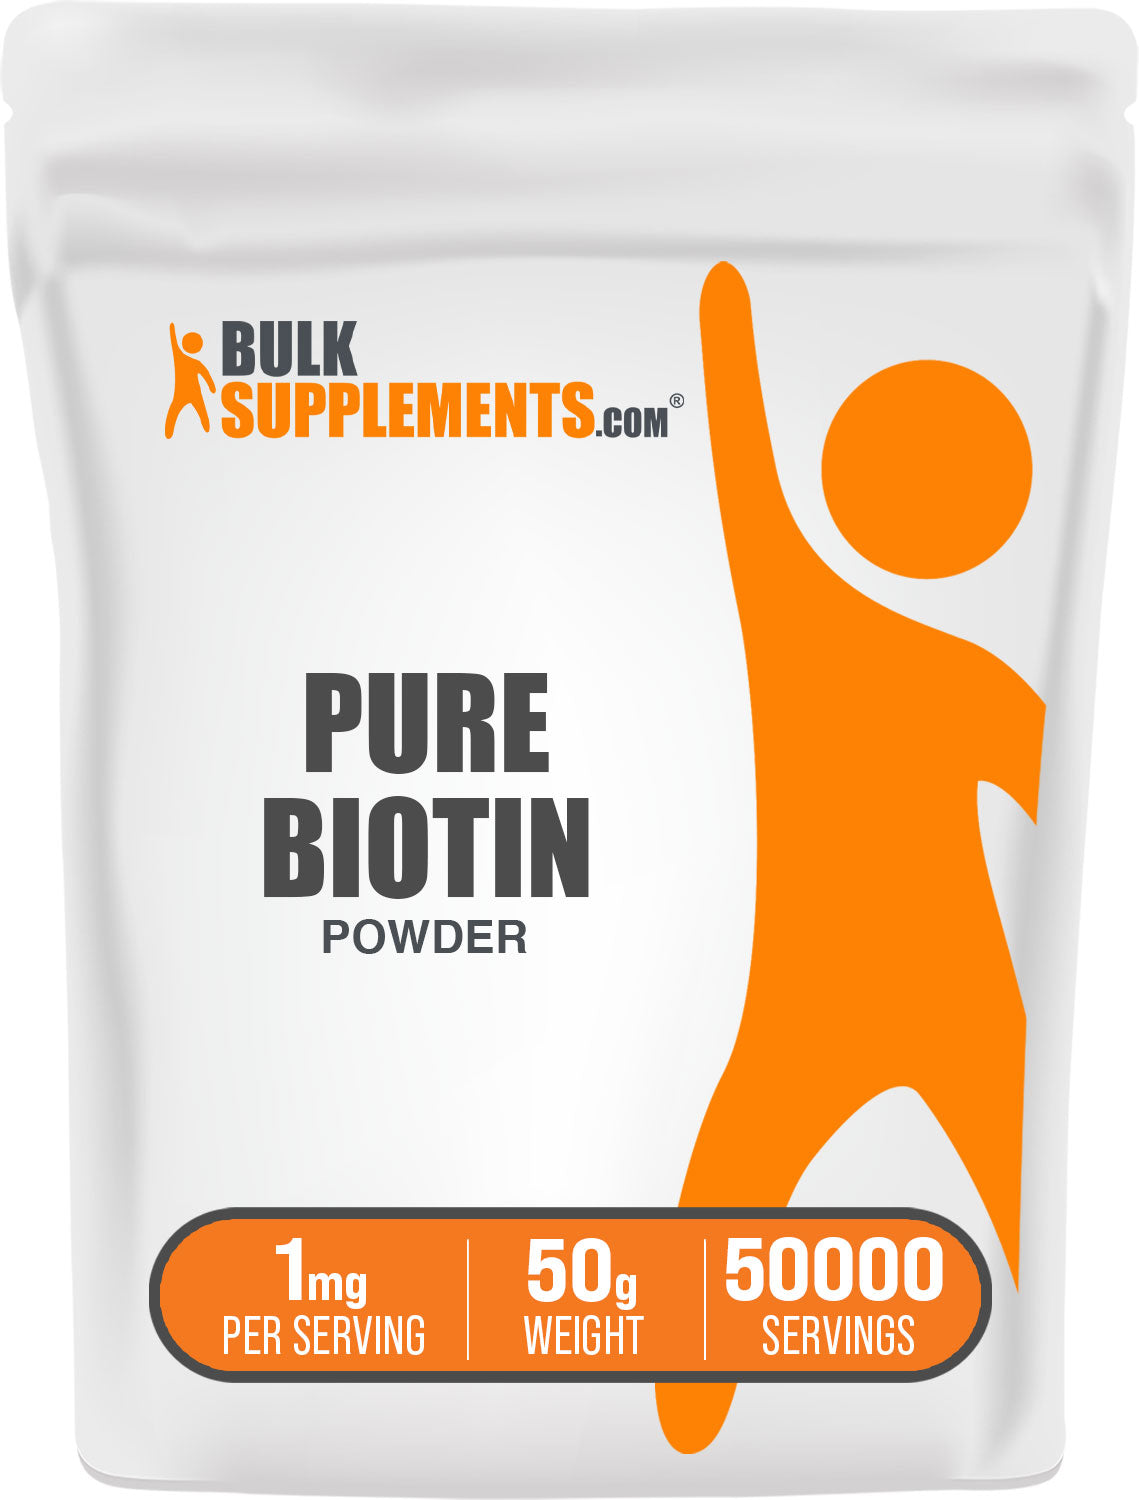 Pure Biotin Powder 50g bag